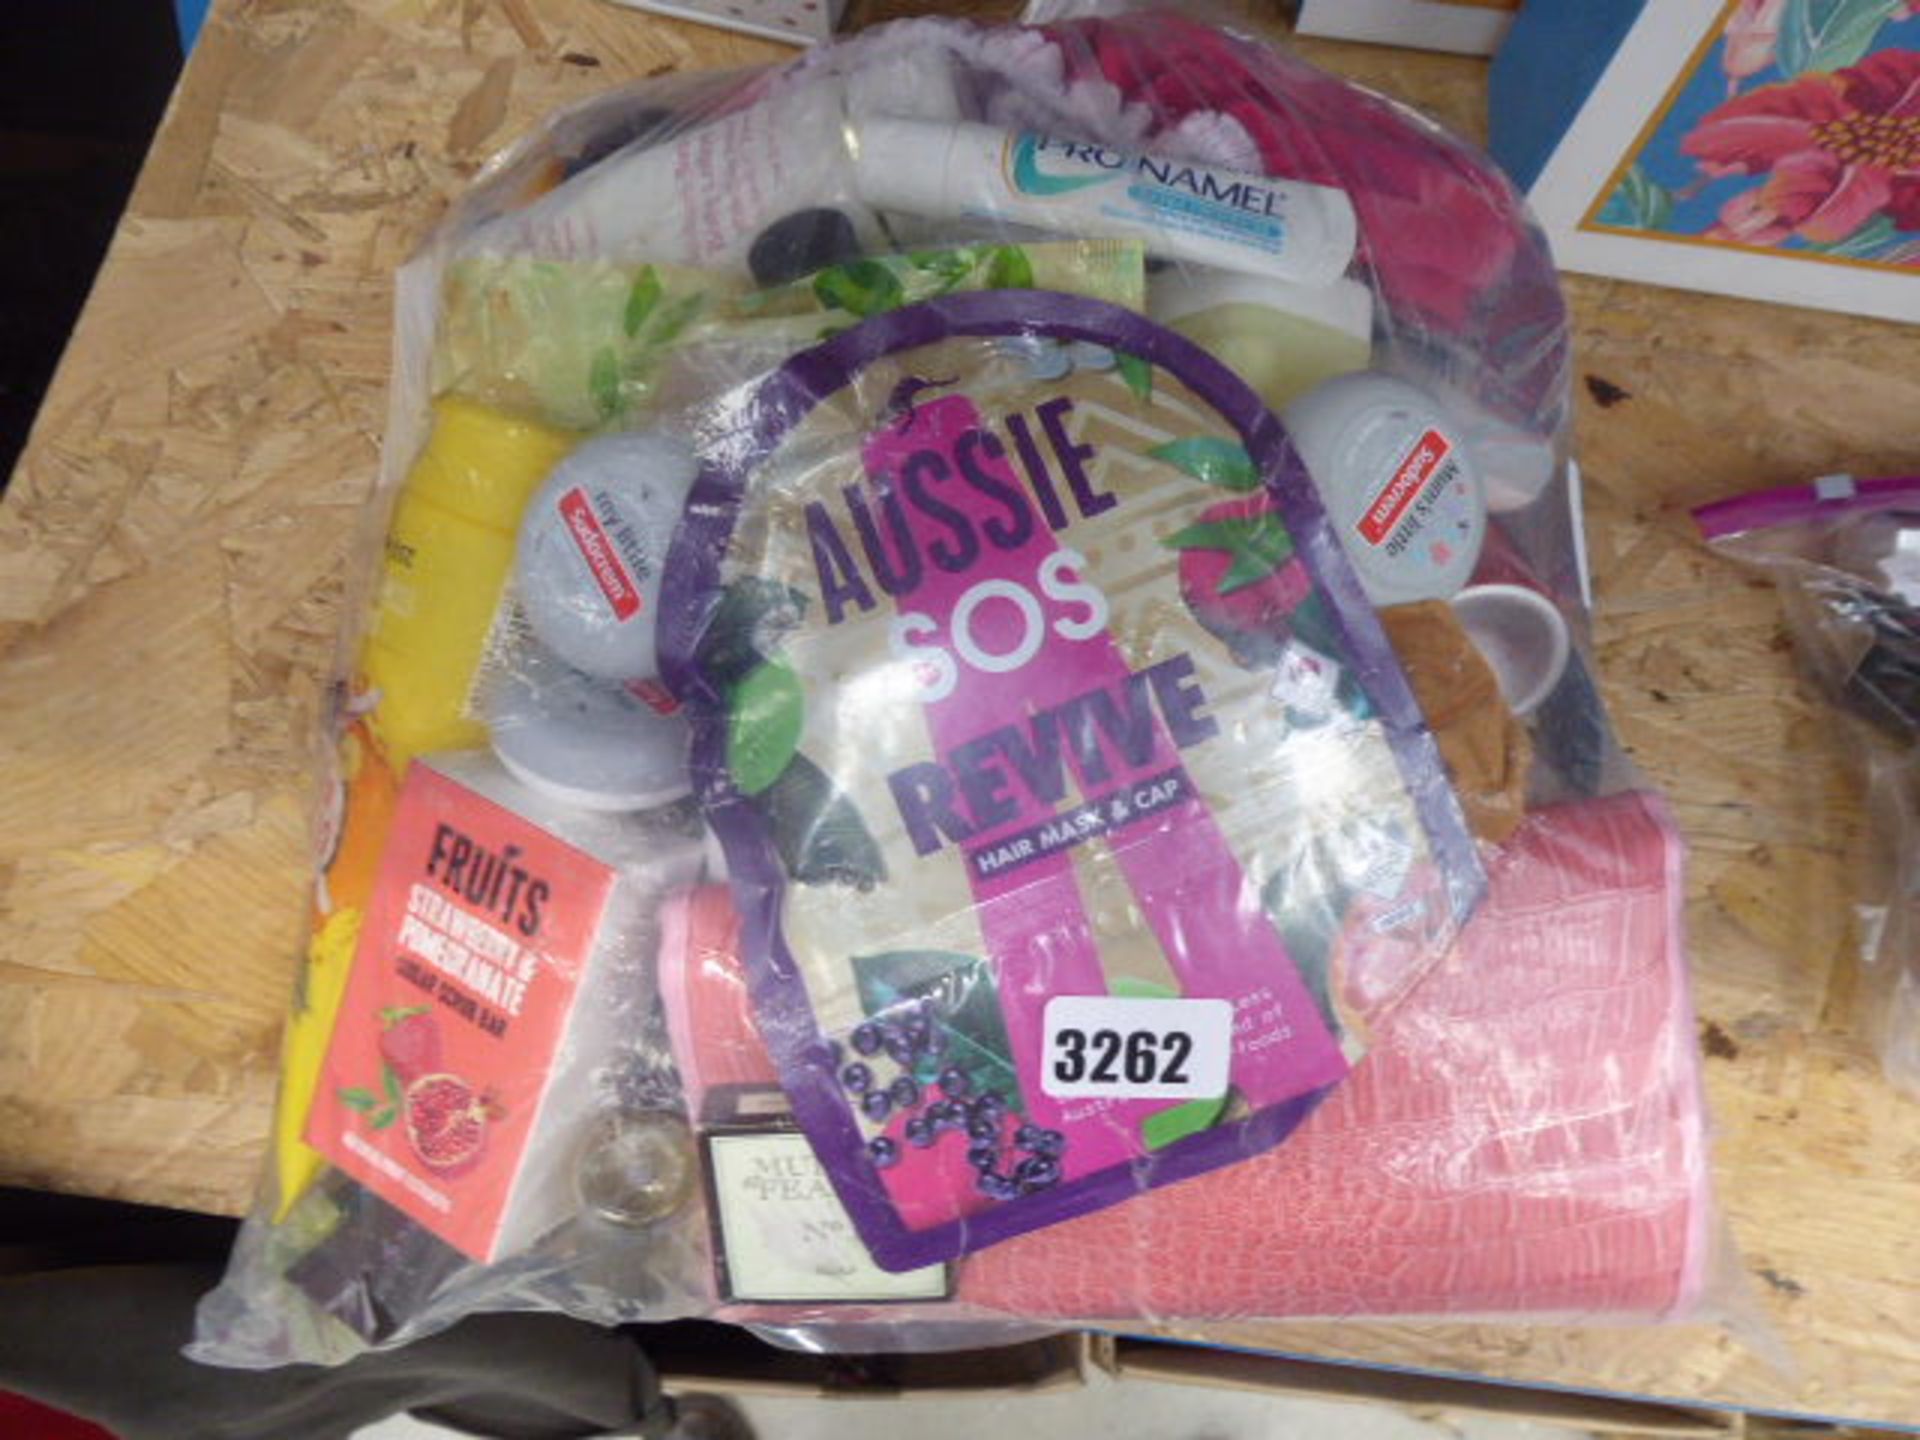 Large bag containing hair masks and caps, scrub bars, creams etc.